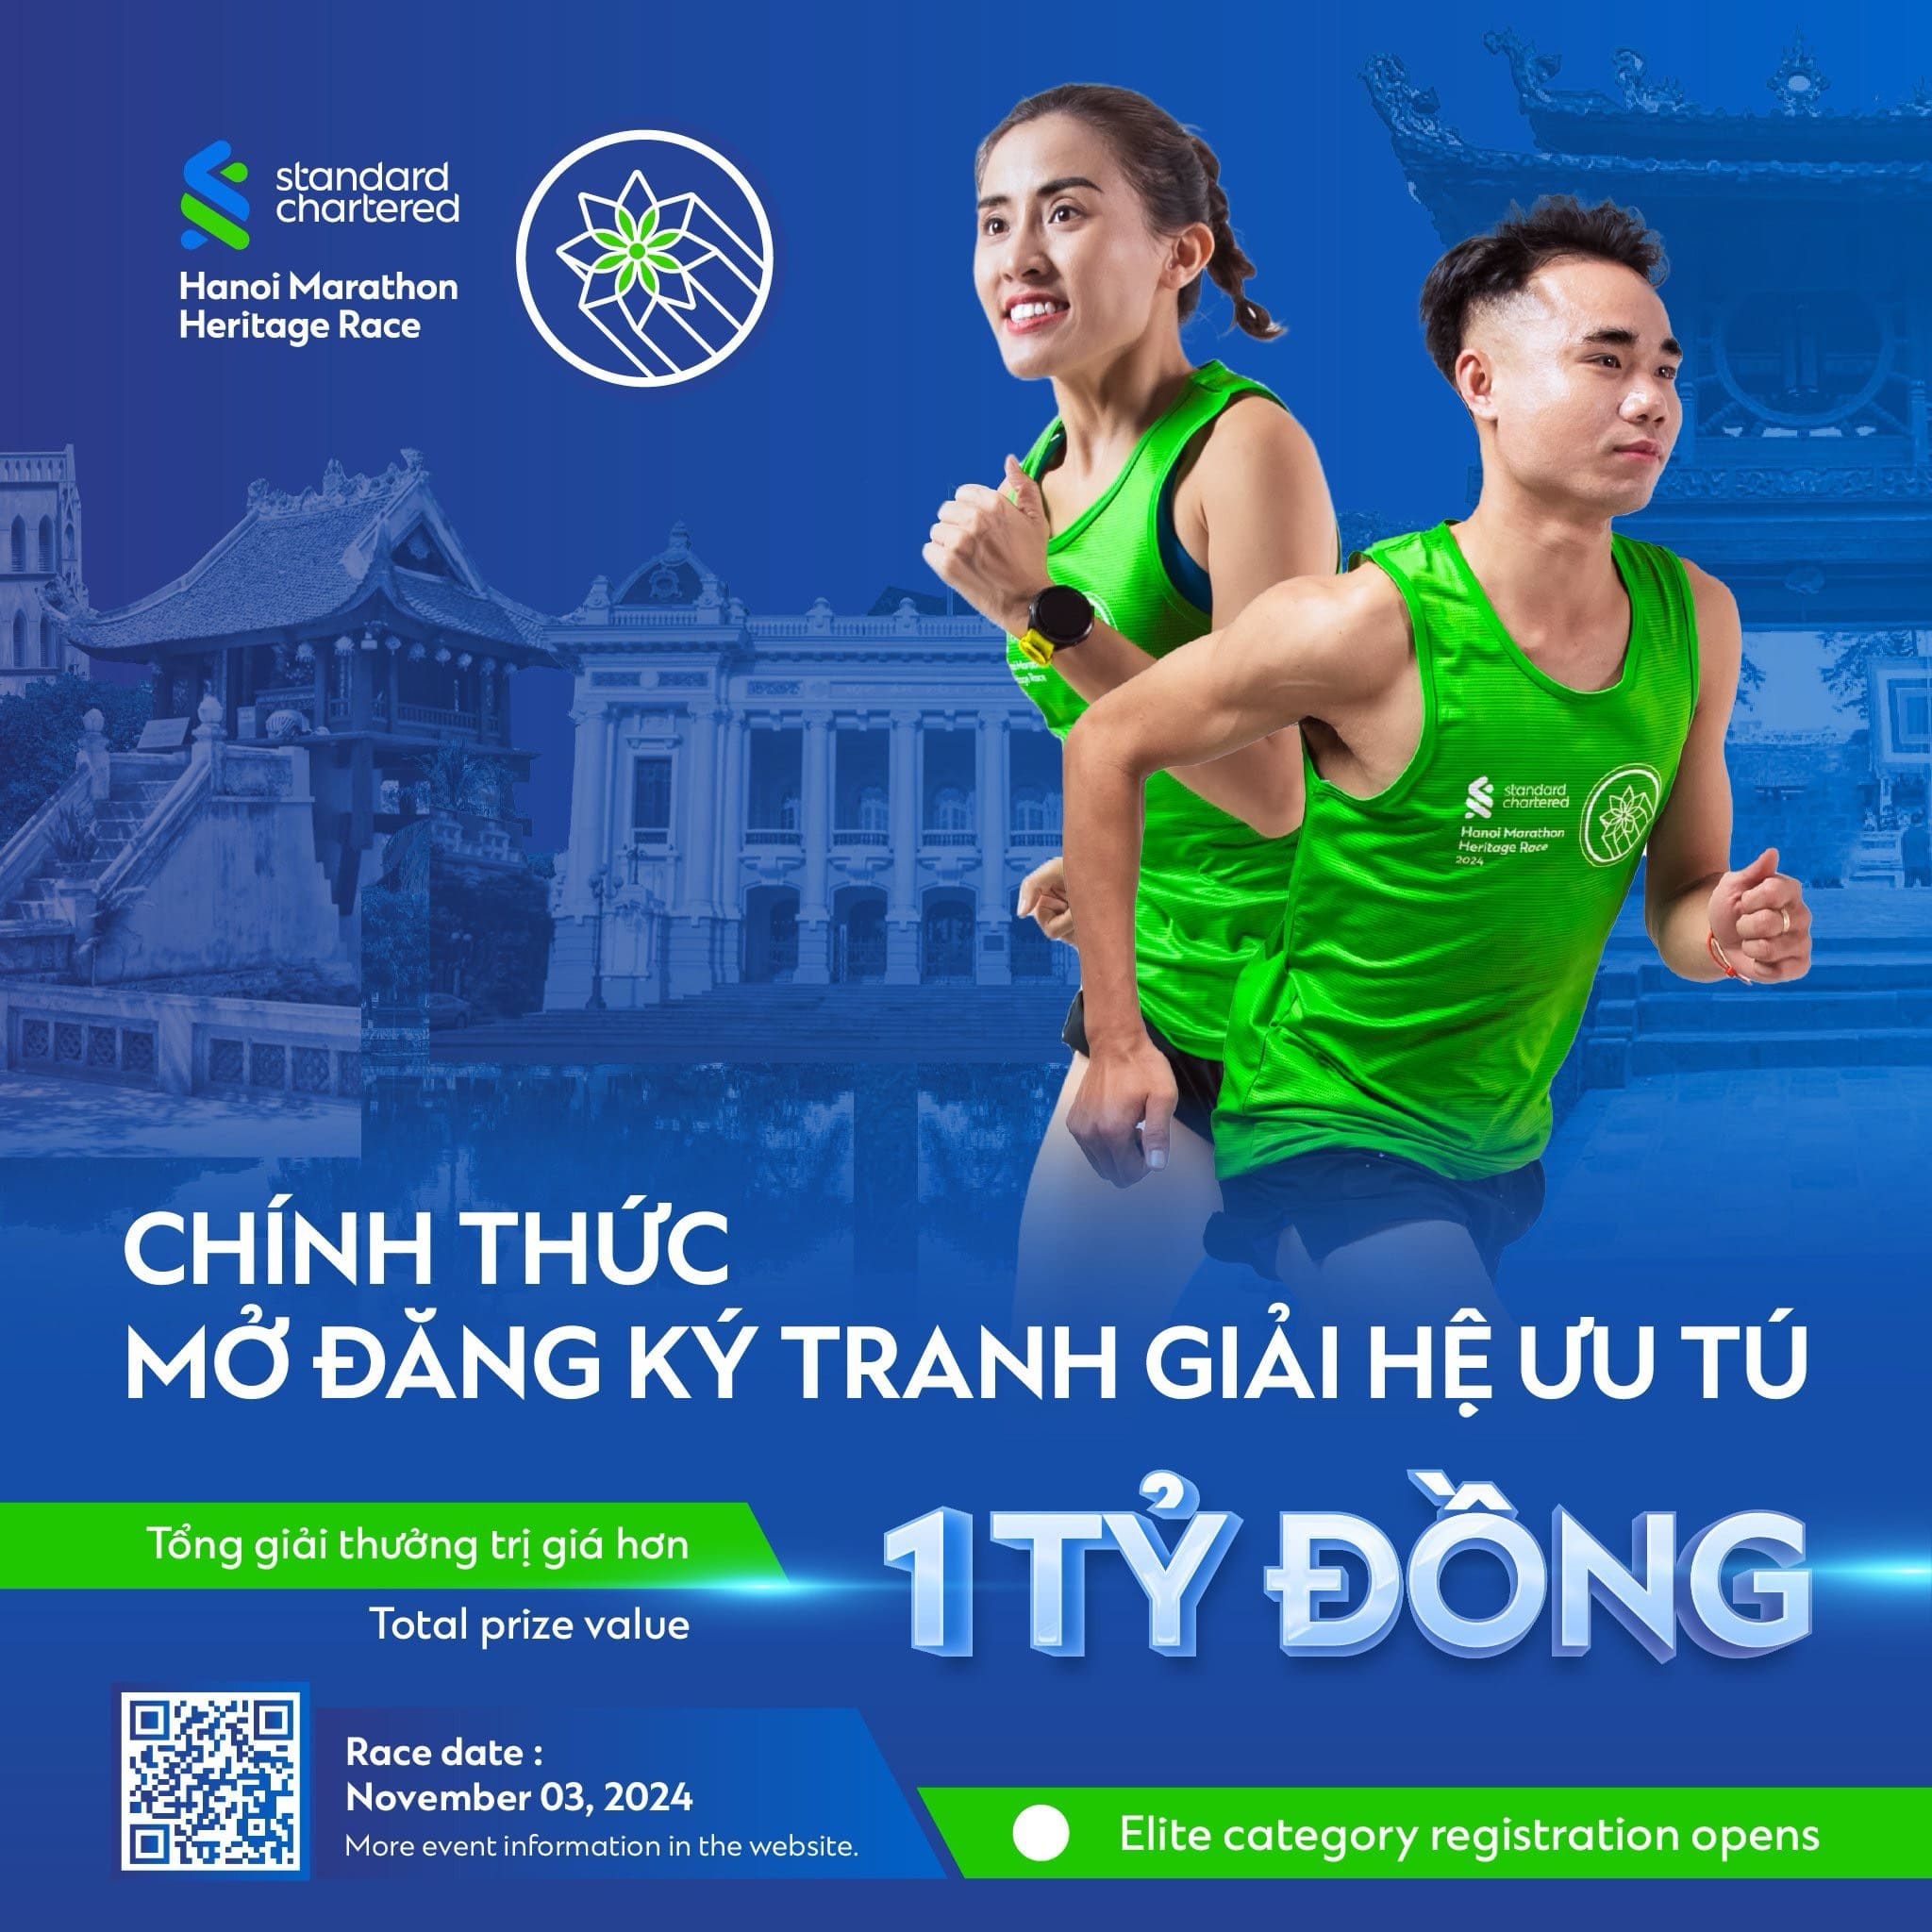 Đăng ký hệ ưu tú (Elite) - Standard Chartered Hanoi Marathon